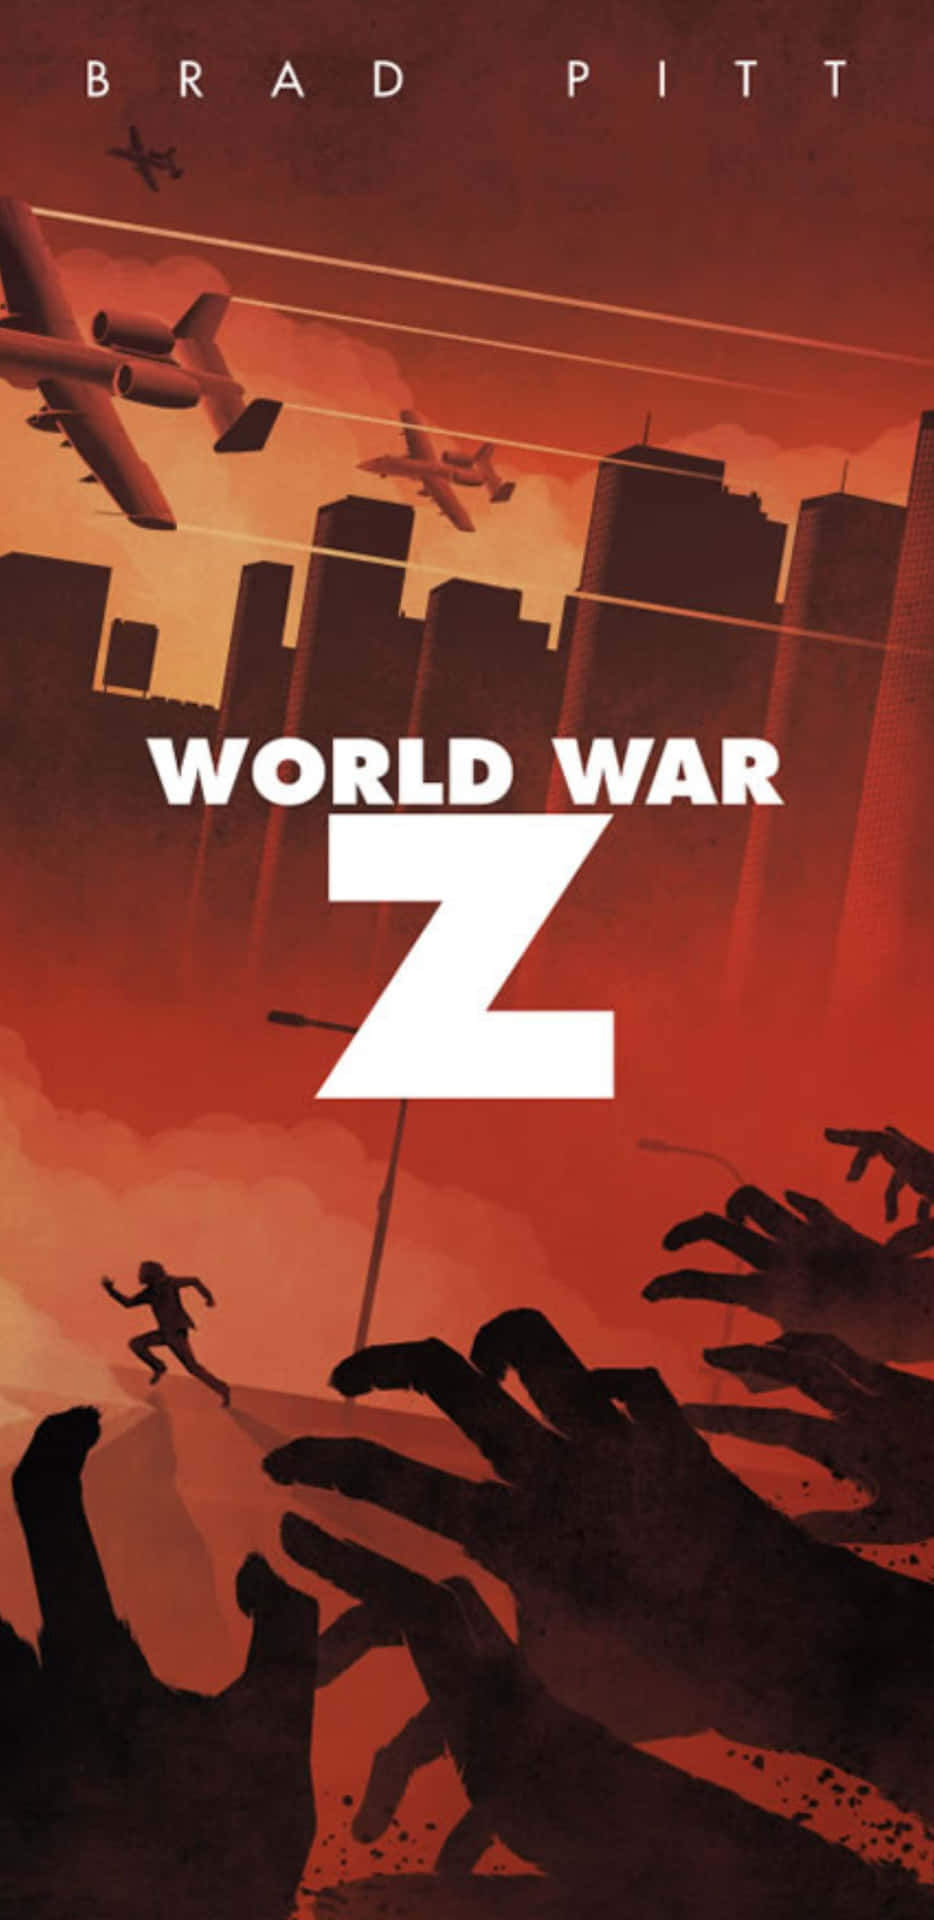 Epic World War Z Scene on the Pixel 3XL